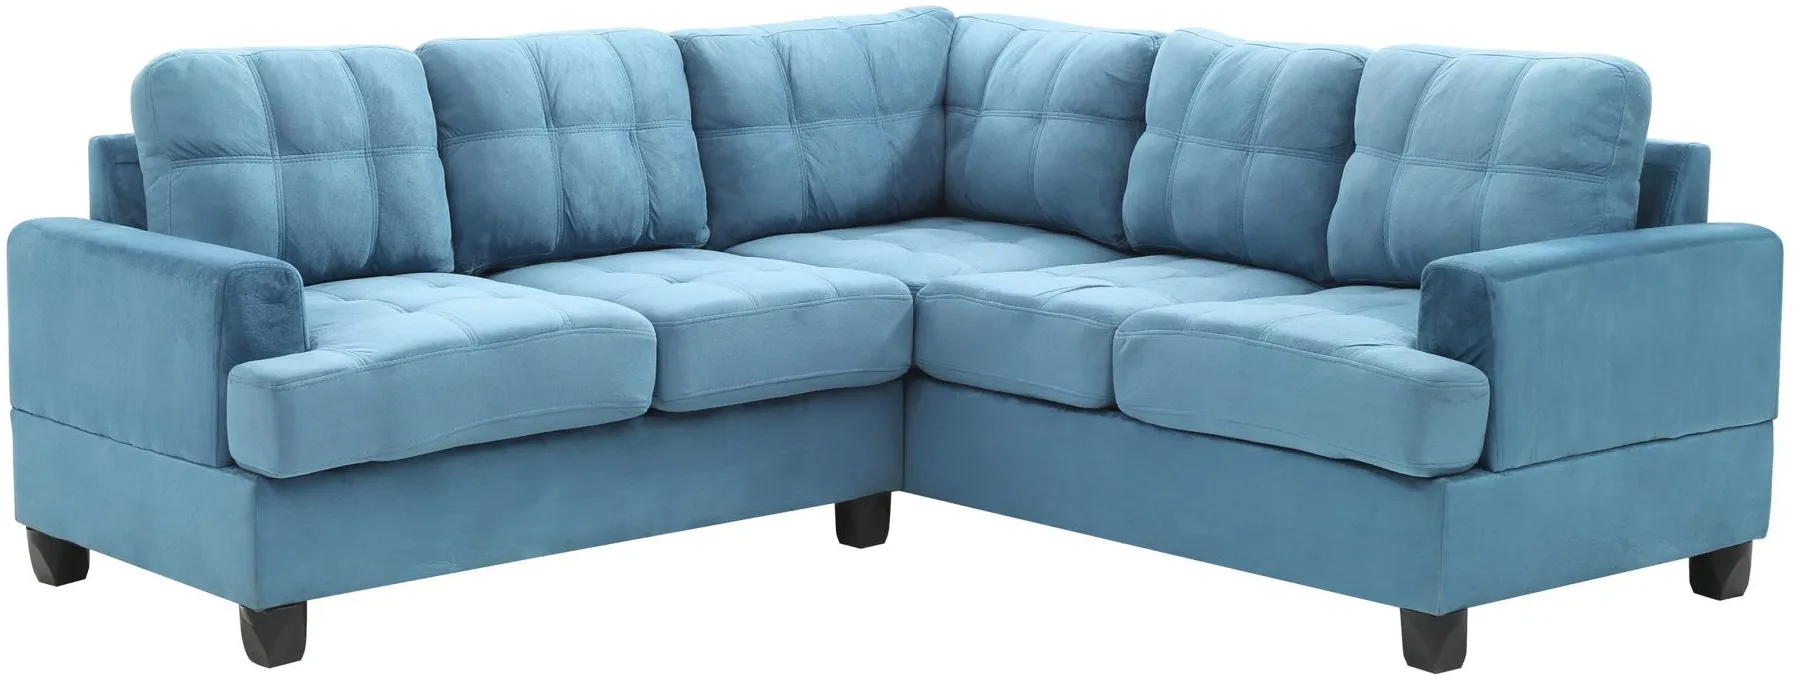 Sandridge 3-piece Sectional Sofa in Aqua by Glory Furniture